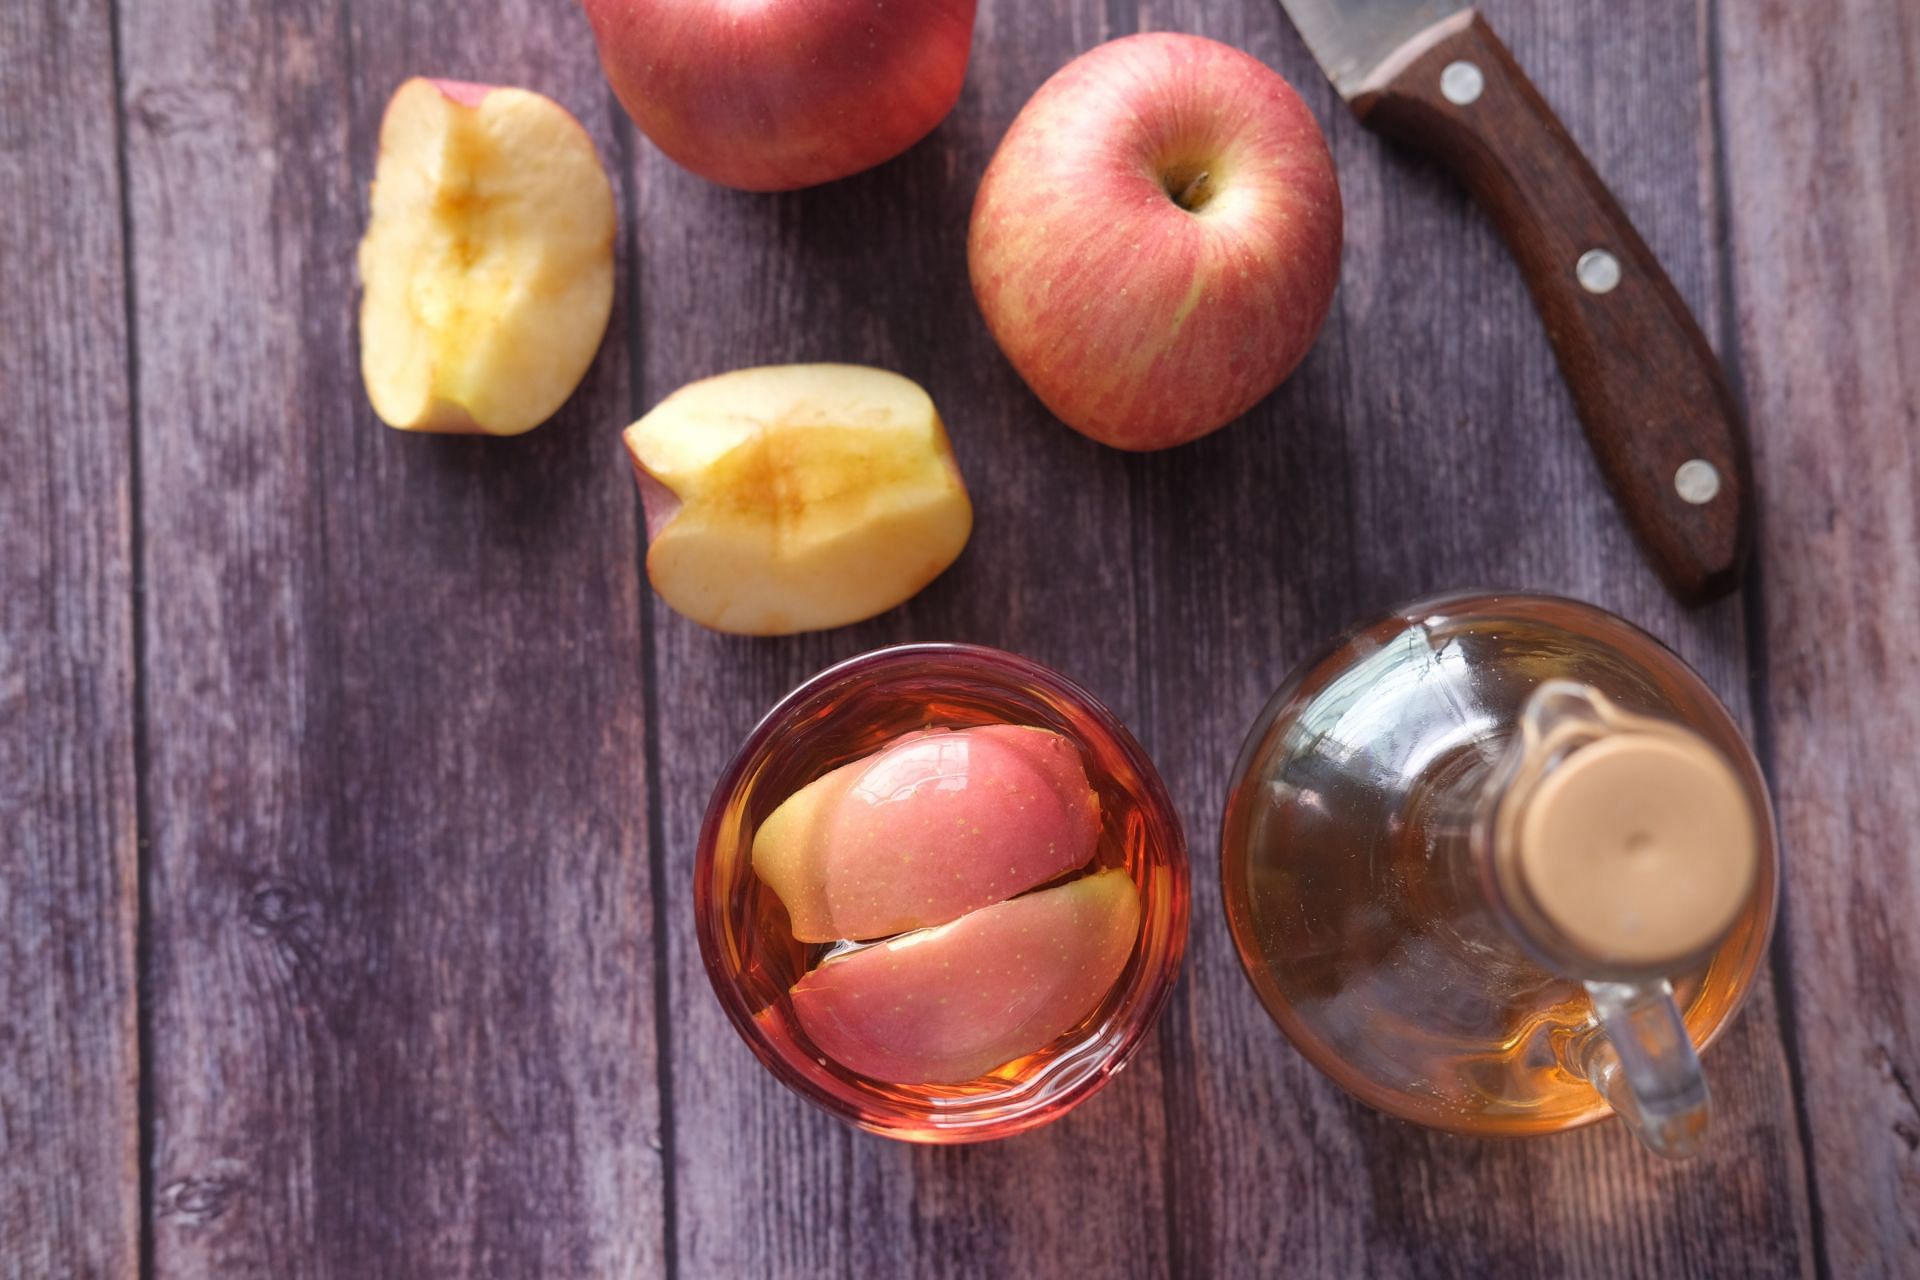 Apple Cider Vinegar is made from fermented apples. (Image via Unsplash/Towfiqu barbhuiya)